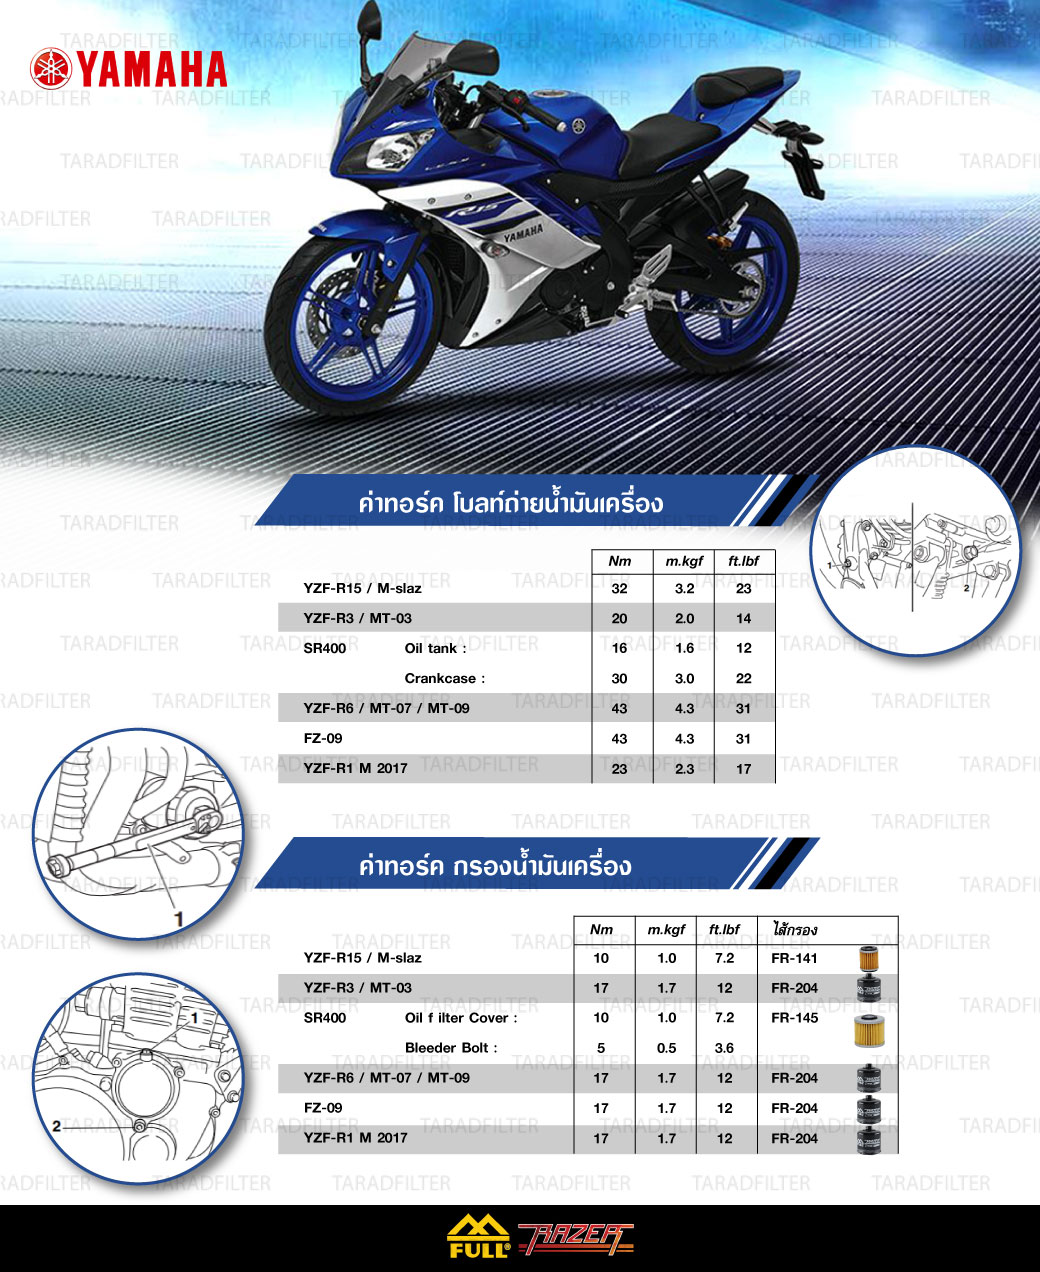 Yamaha oil set torque